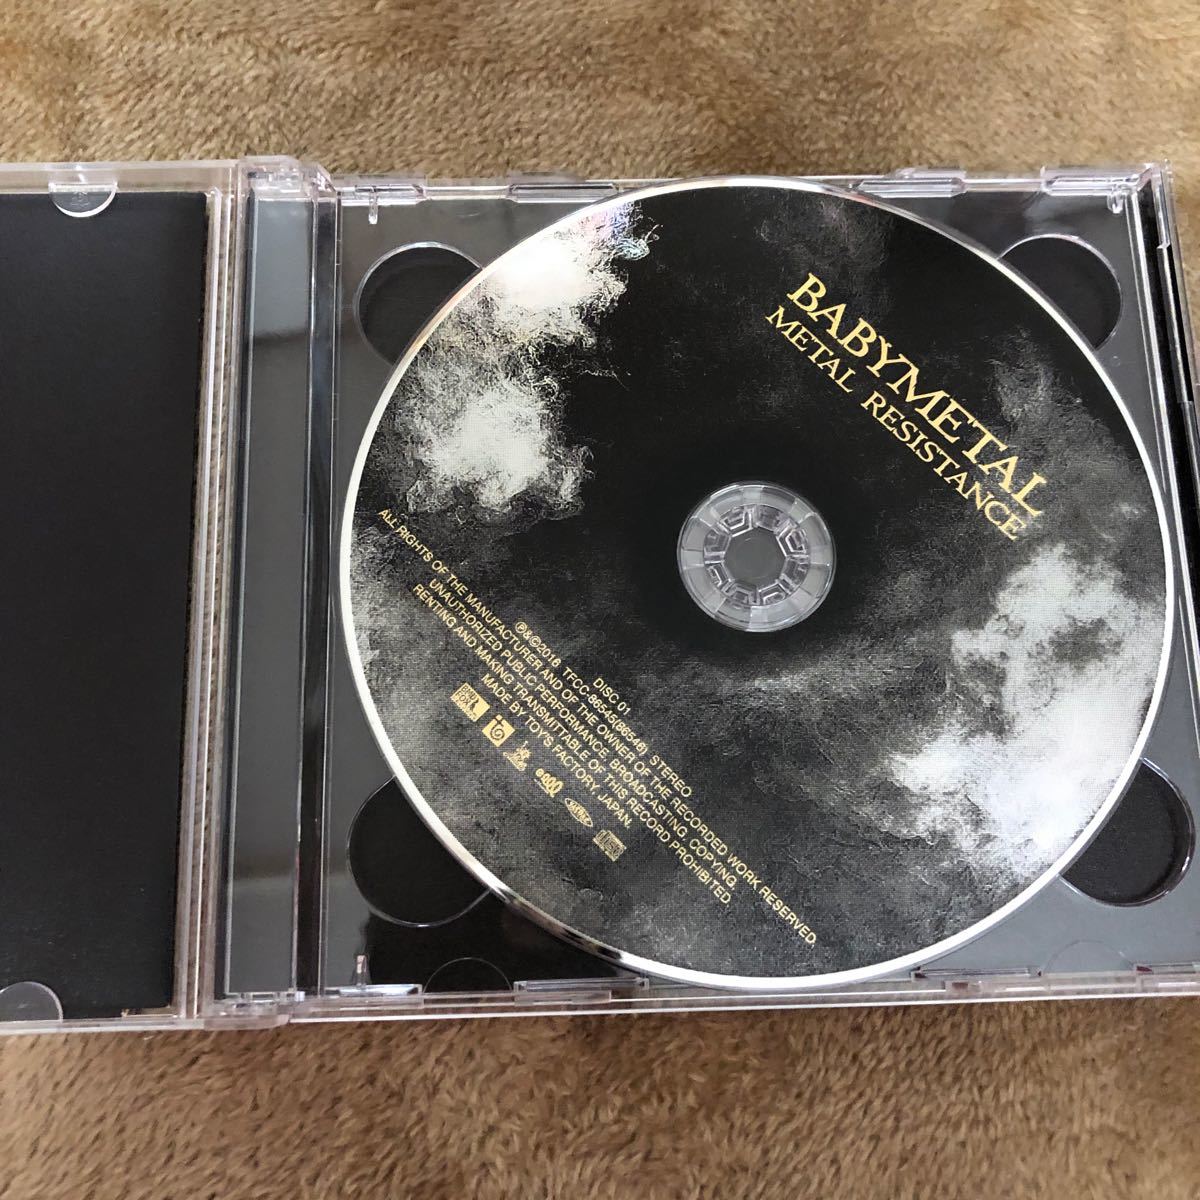 METAL RESISTANCE (初回生産限定盤) (DVD付)